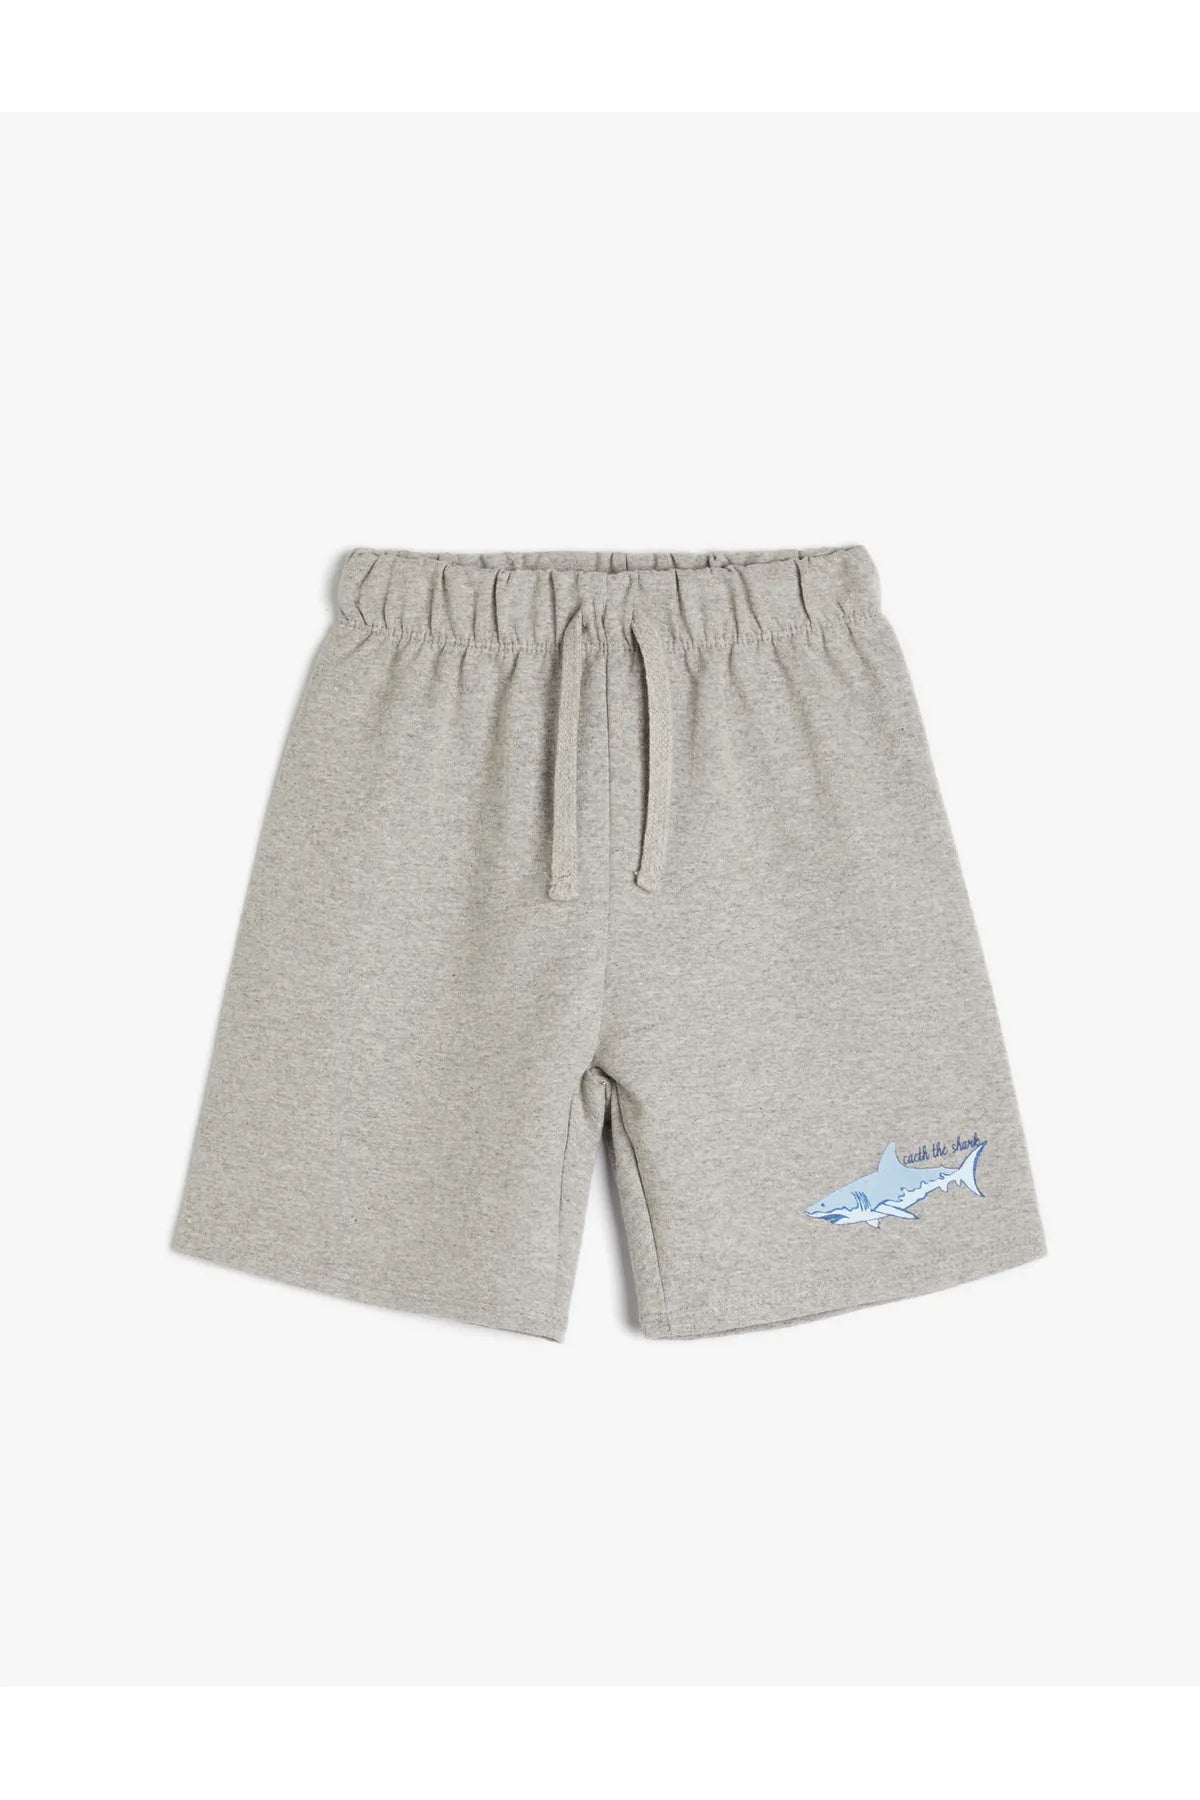 Cotton Boy's  Shark Printed Tie Waist Shorts